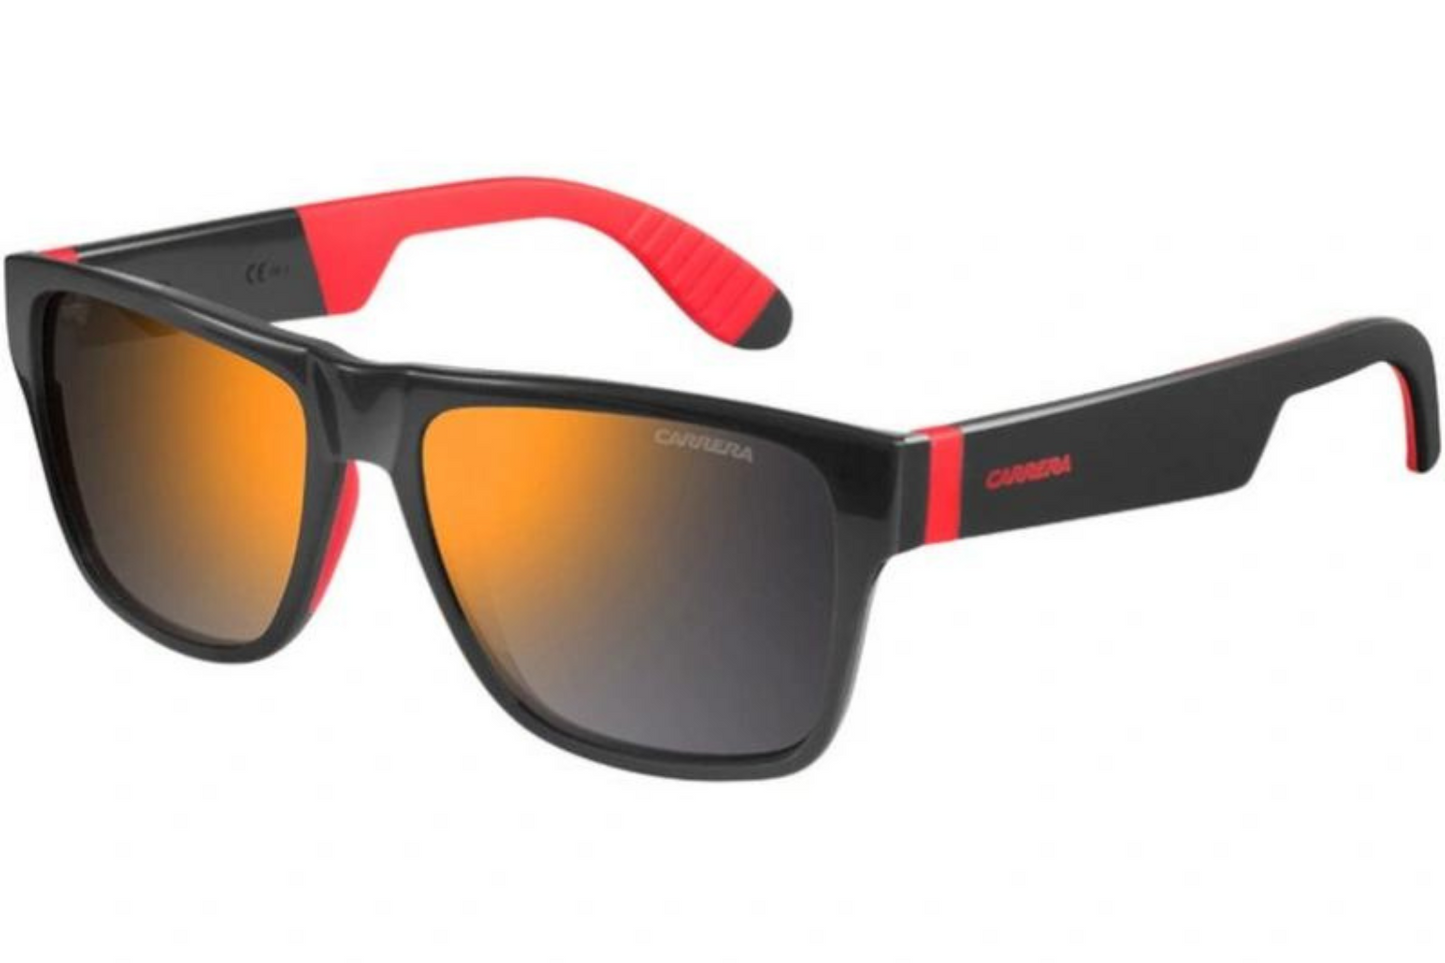 Carrera Sunglasses CA 5002 SP 268 CT 55